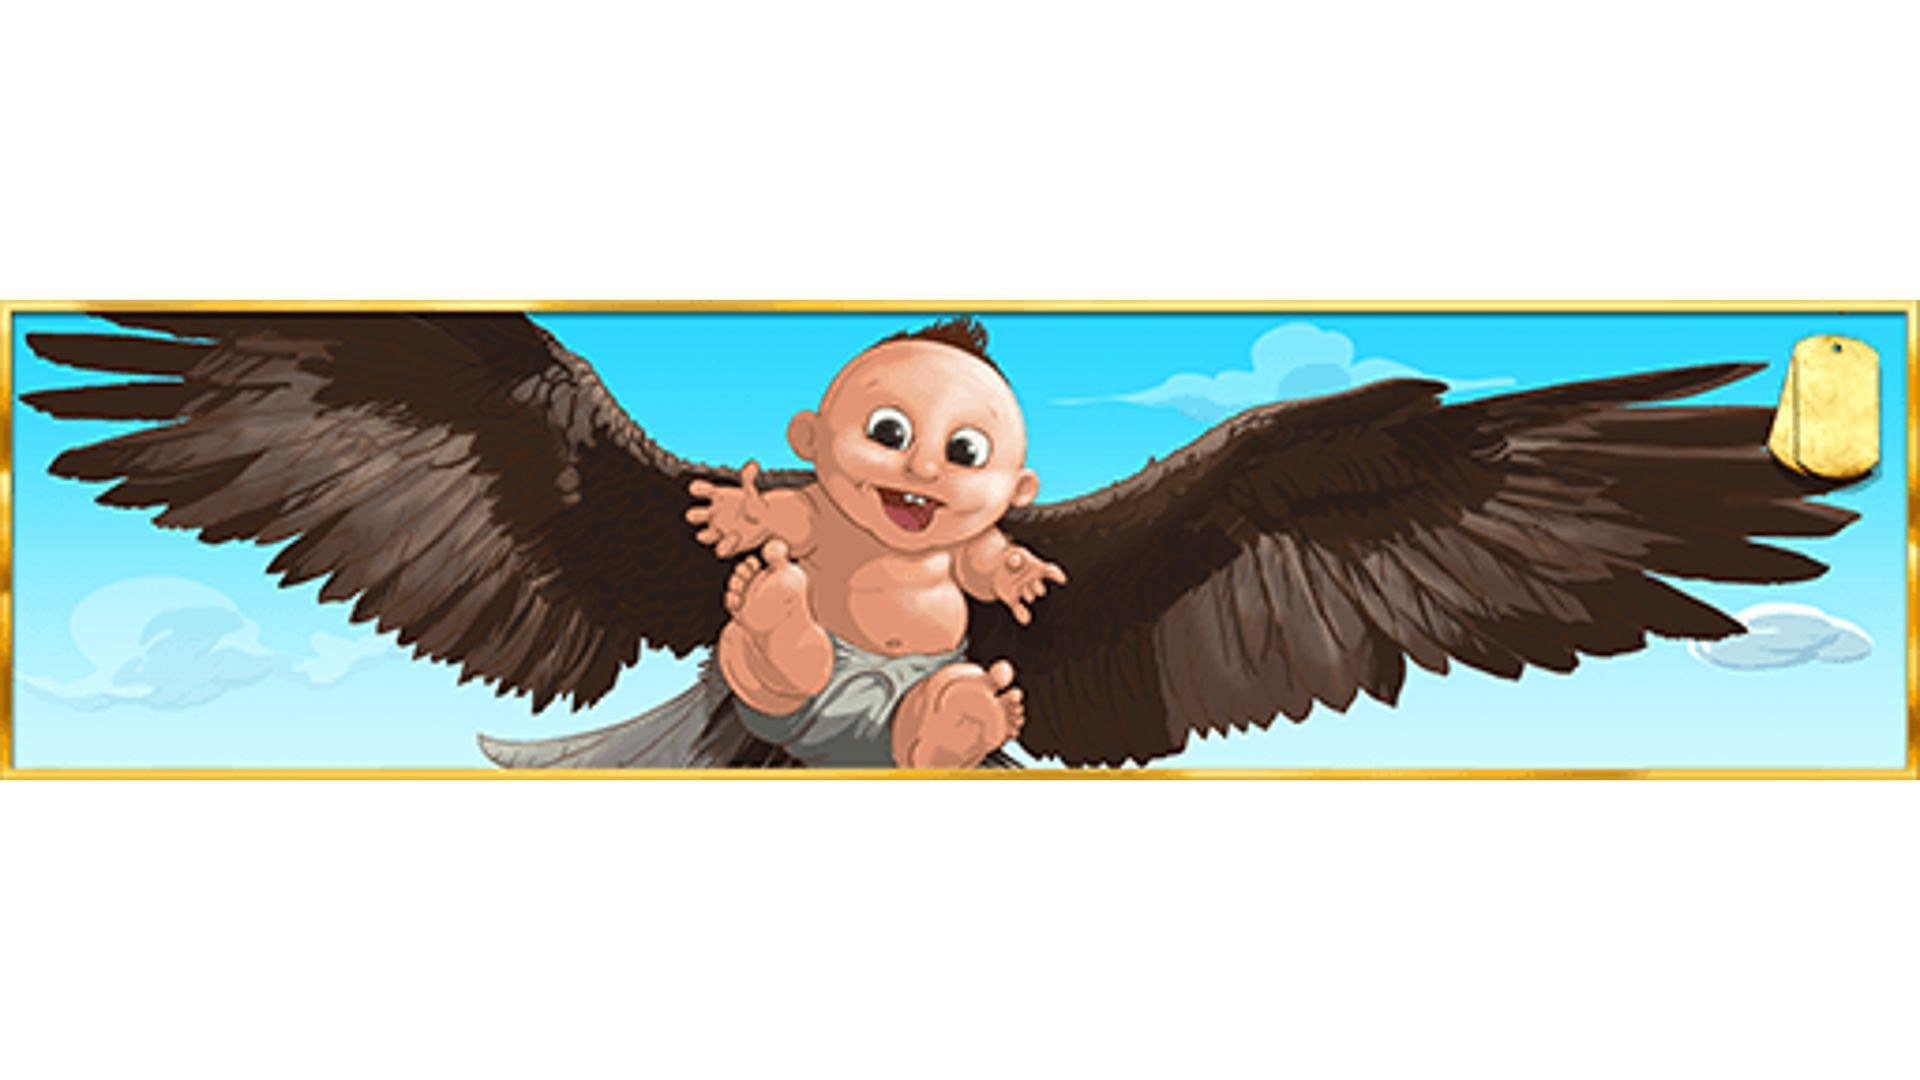 The "Eagle Child!" Calling Card reward (Image via Activision)